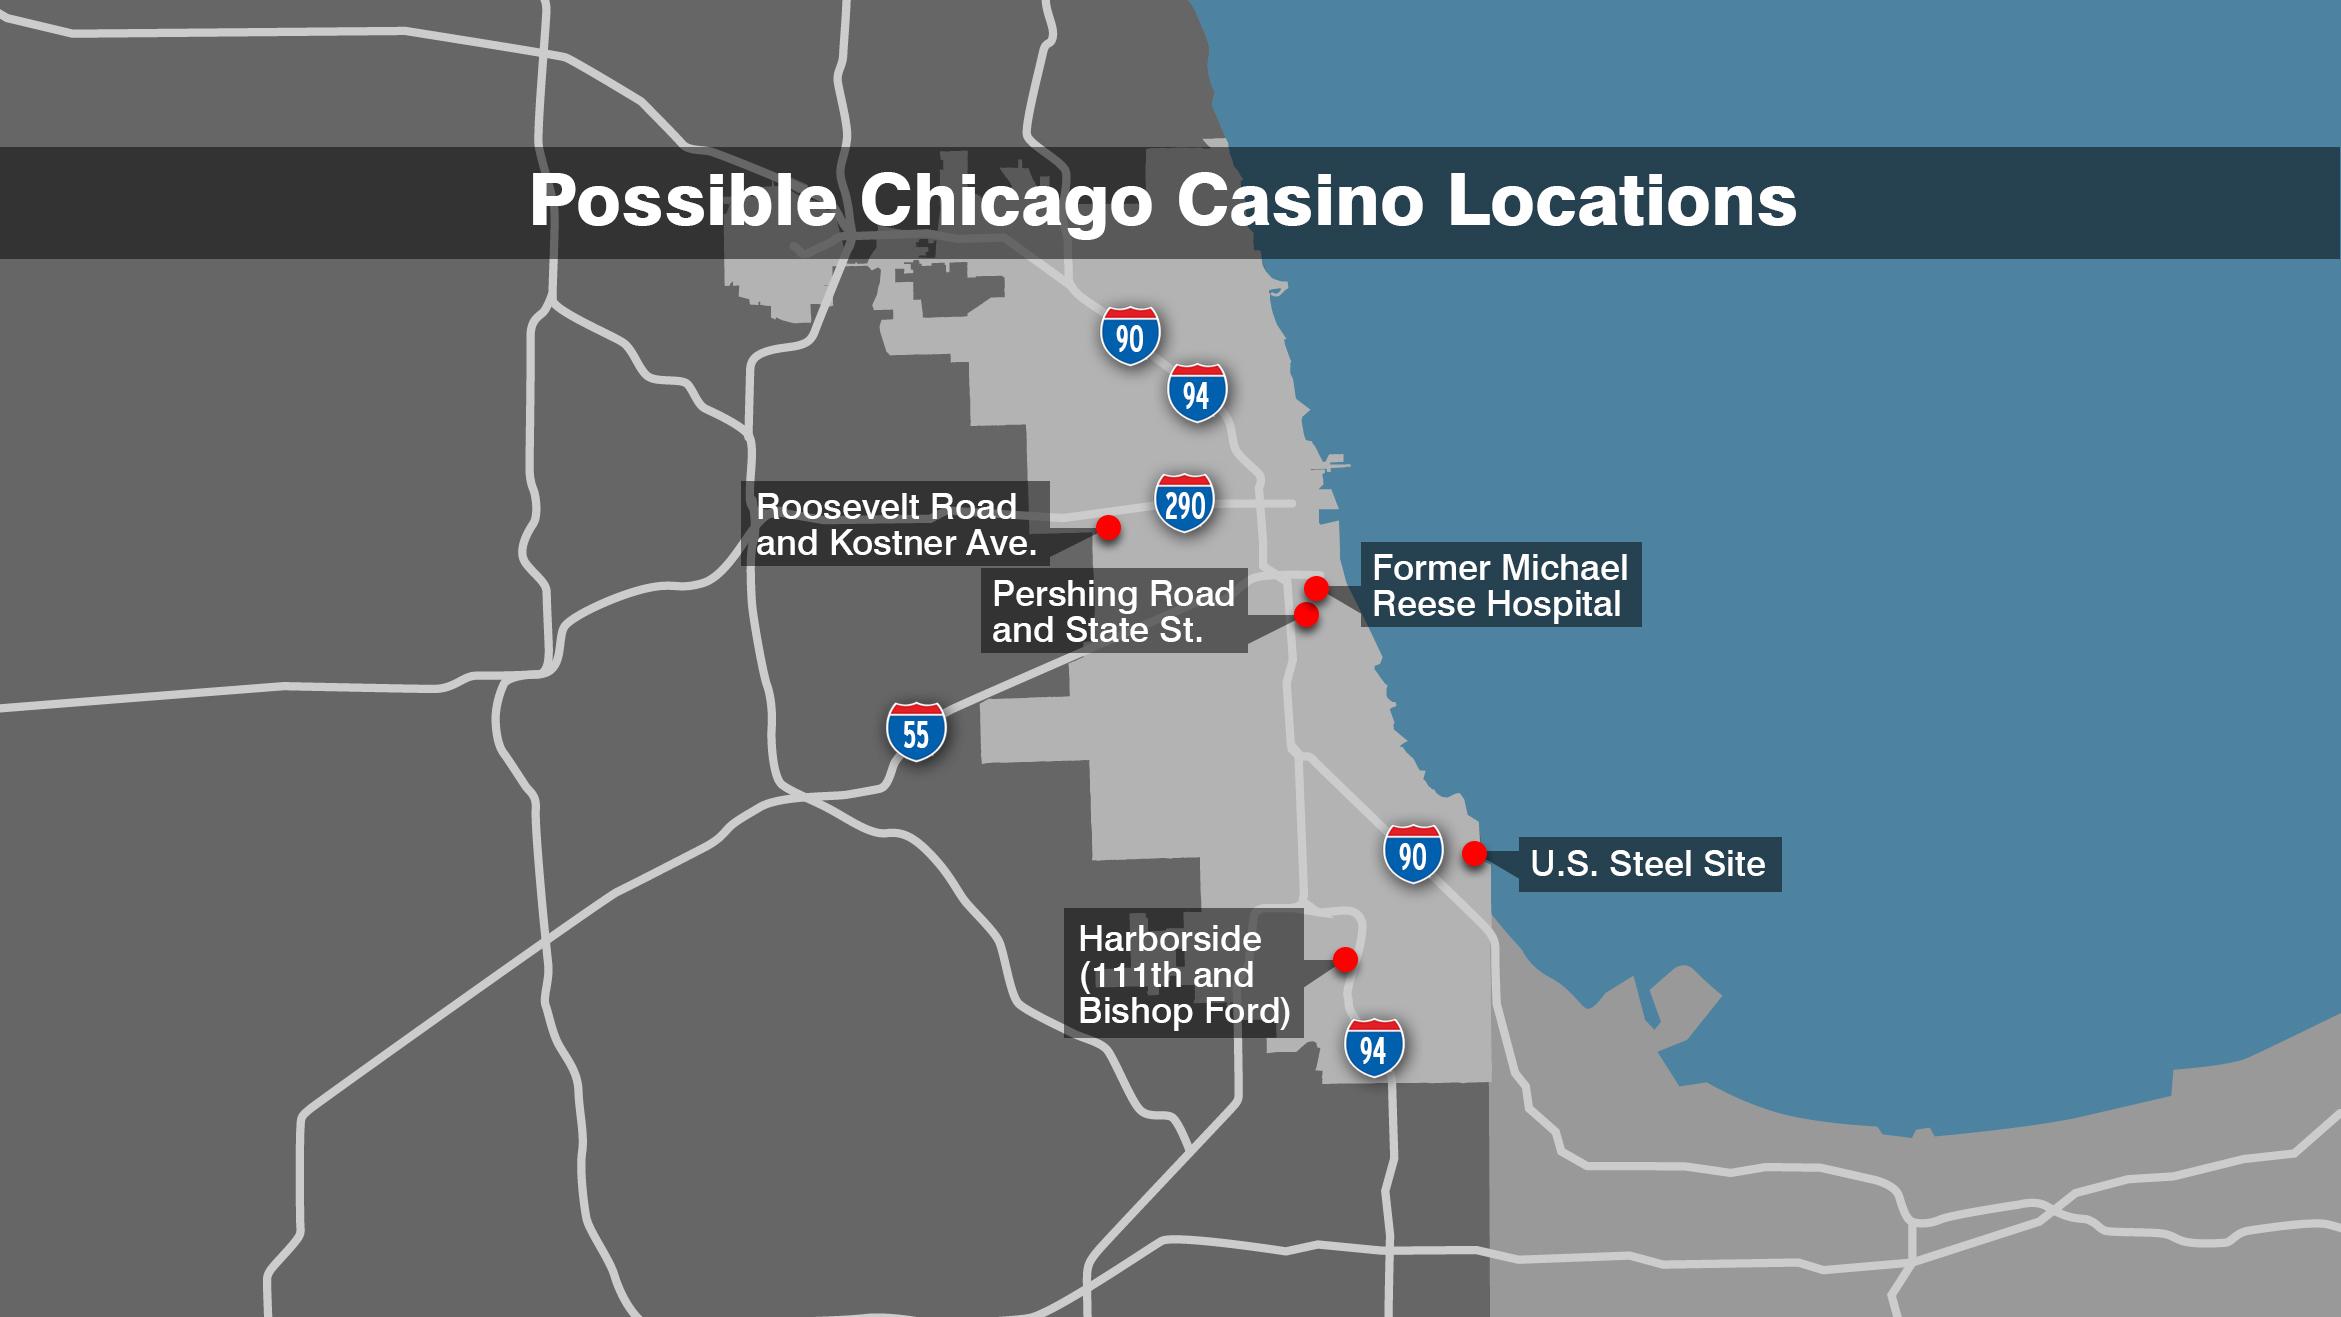 alabama casinos locations